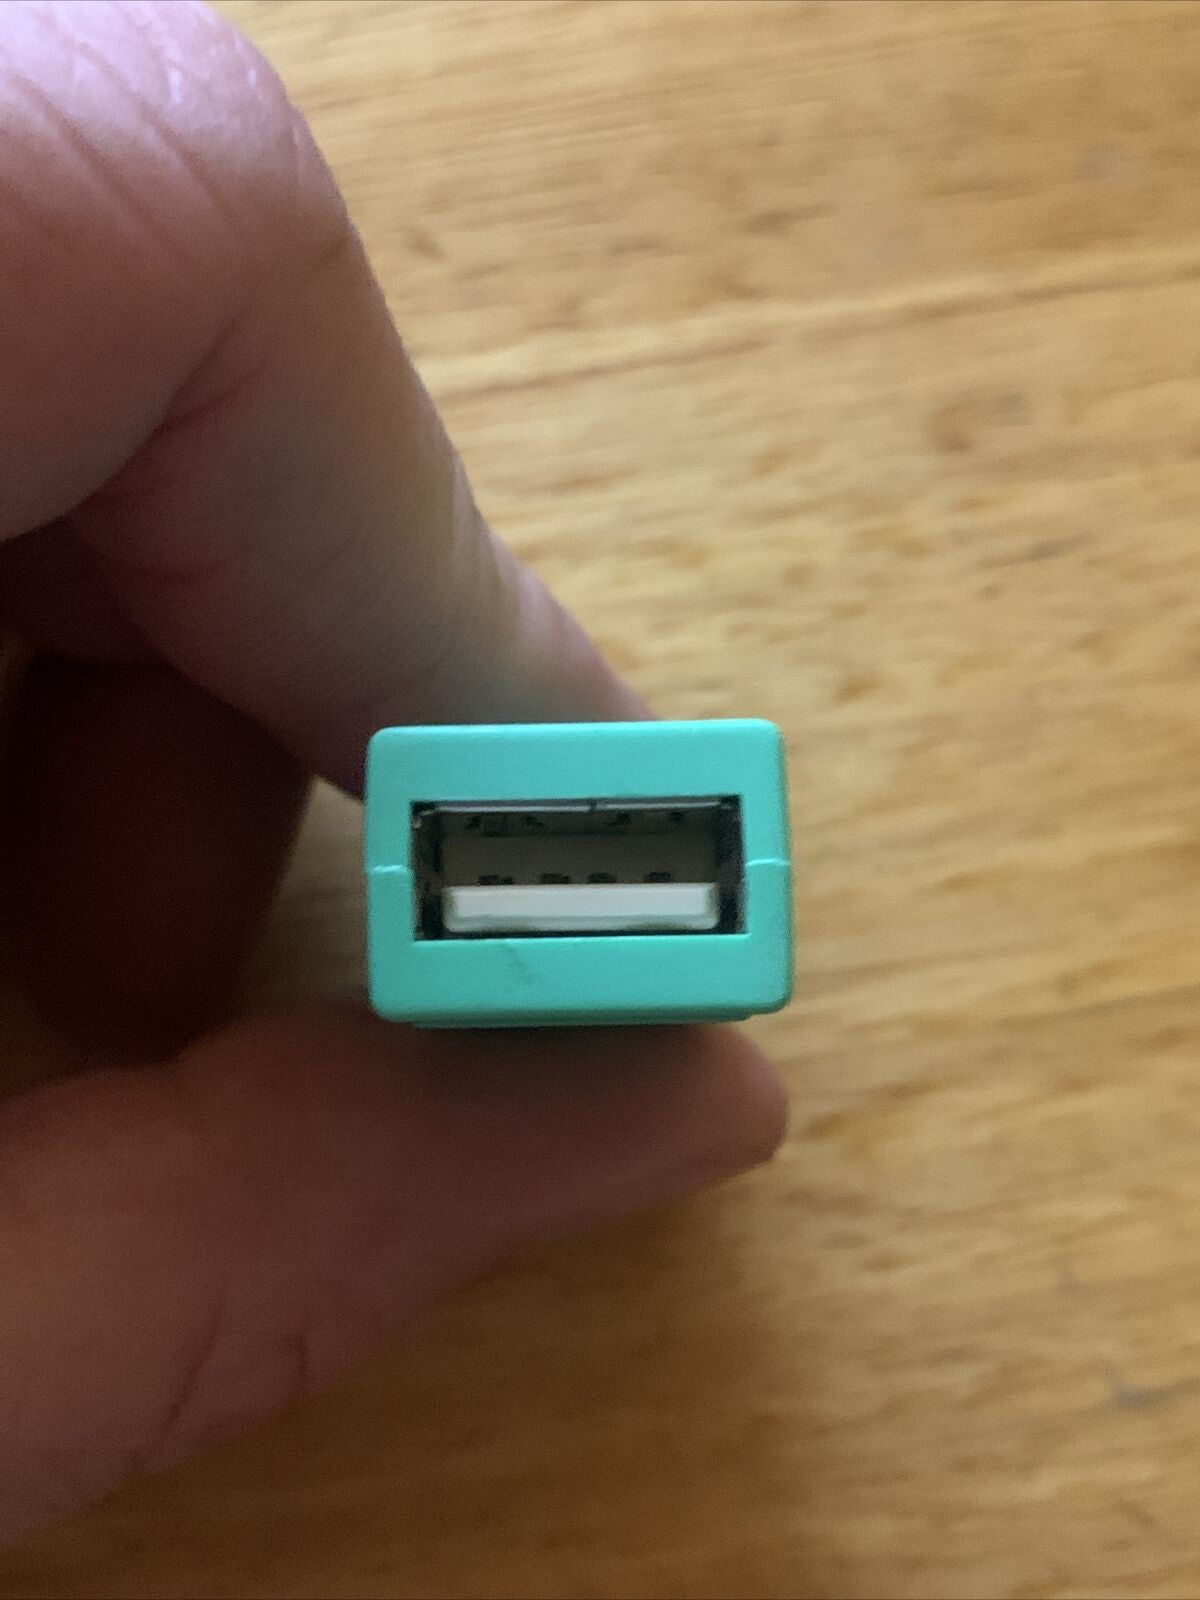 Logitech PS/2 Port To USB Adapter 501215-0004